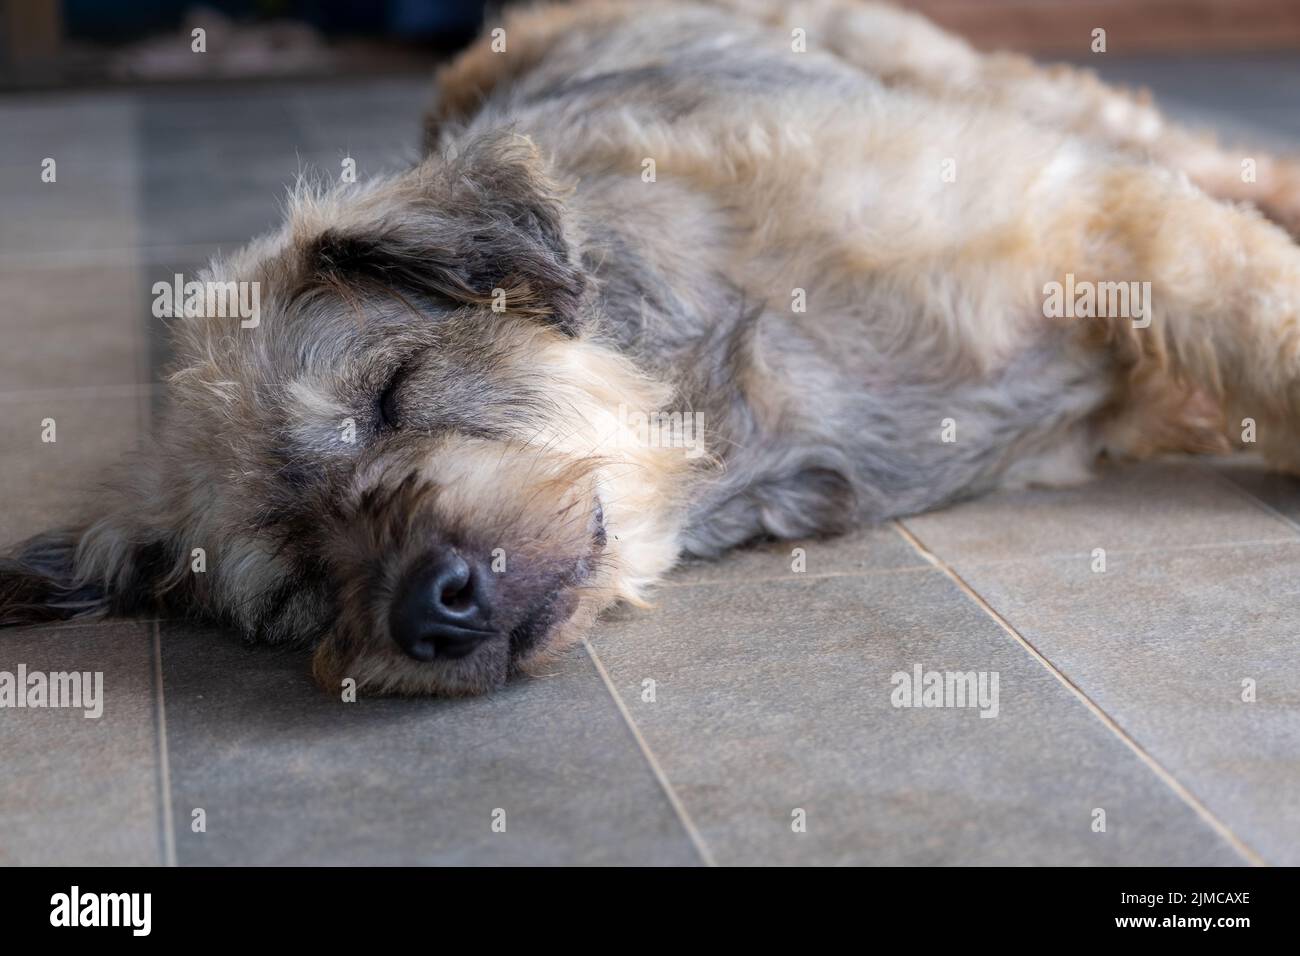 Dog pet sleep lazy lay down canine sit concept. Stock Photo